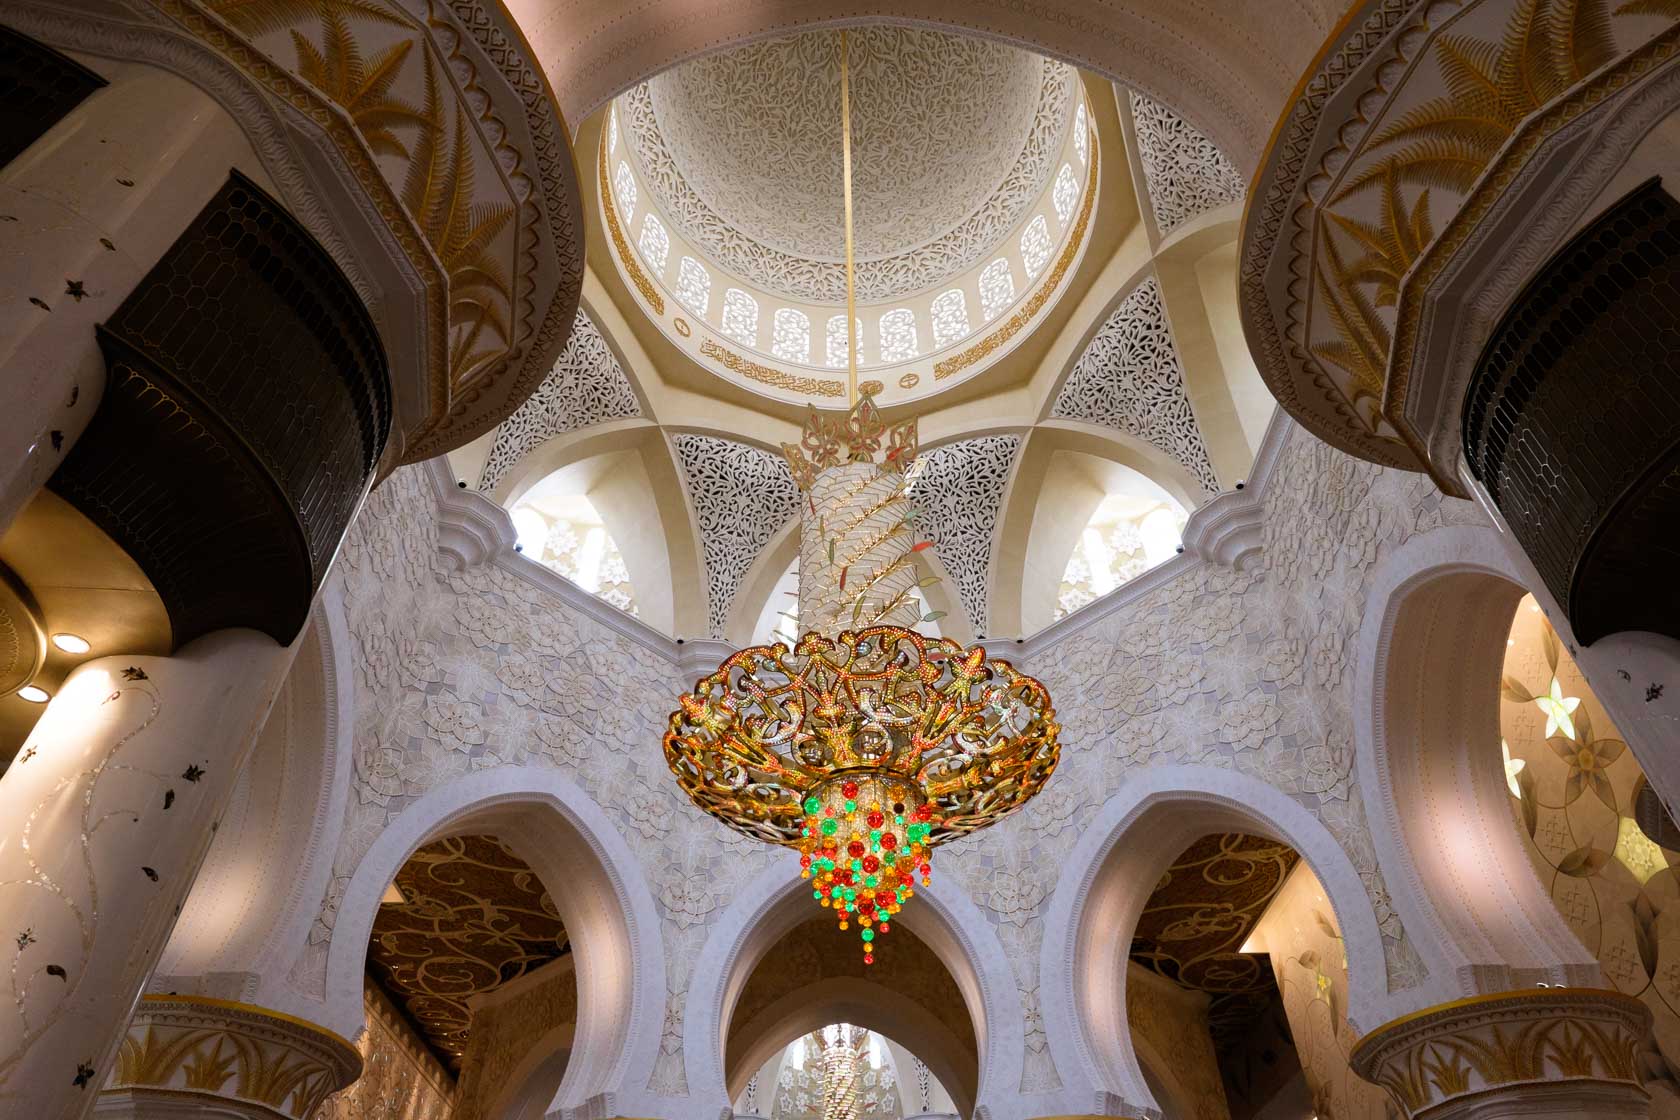 Chandelier in the Main Prayer Hall, Abu Dhabi